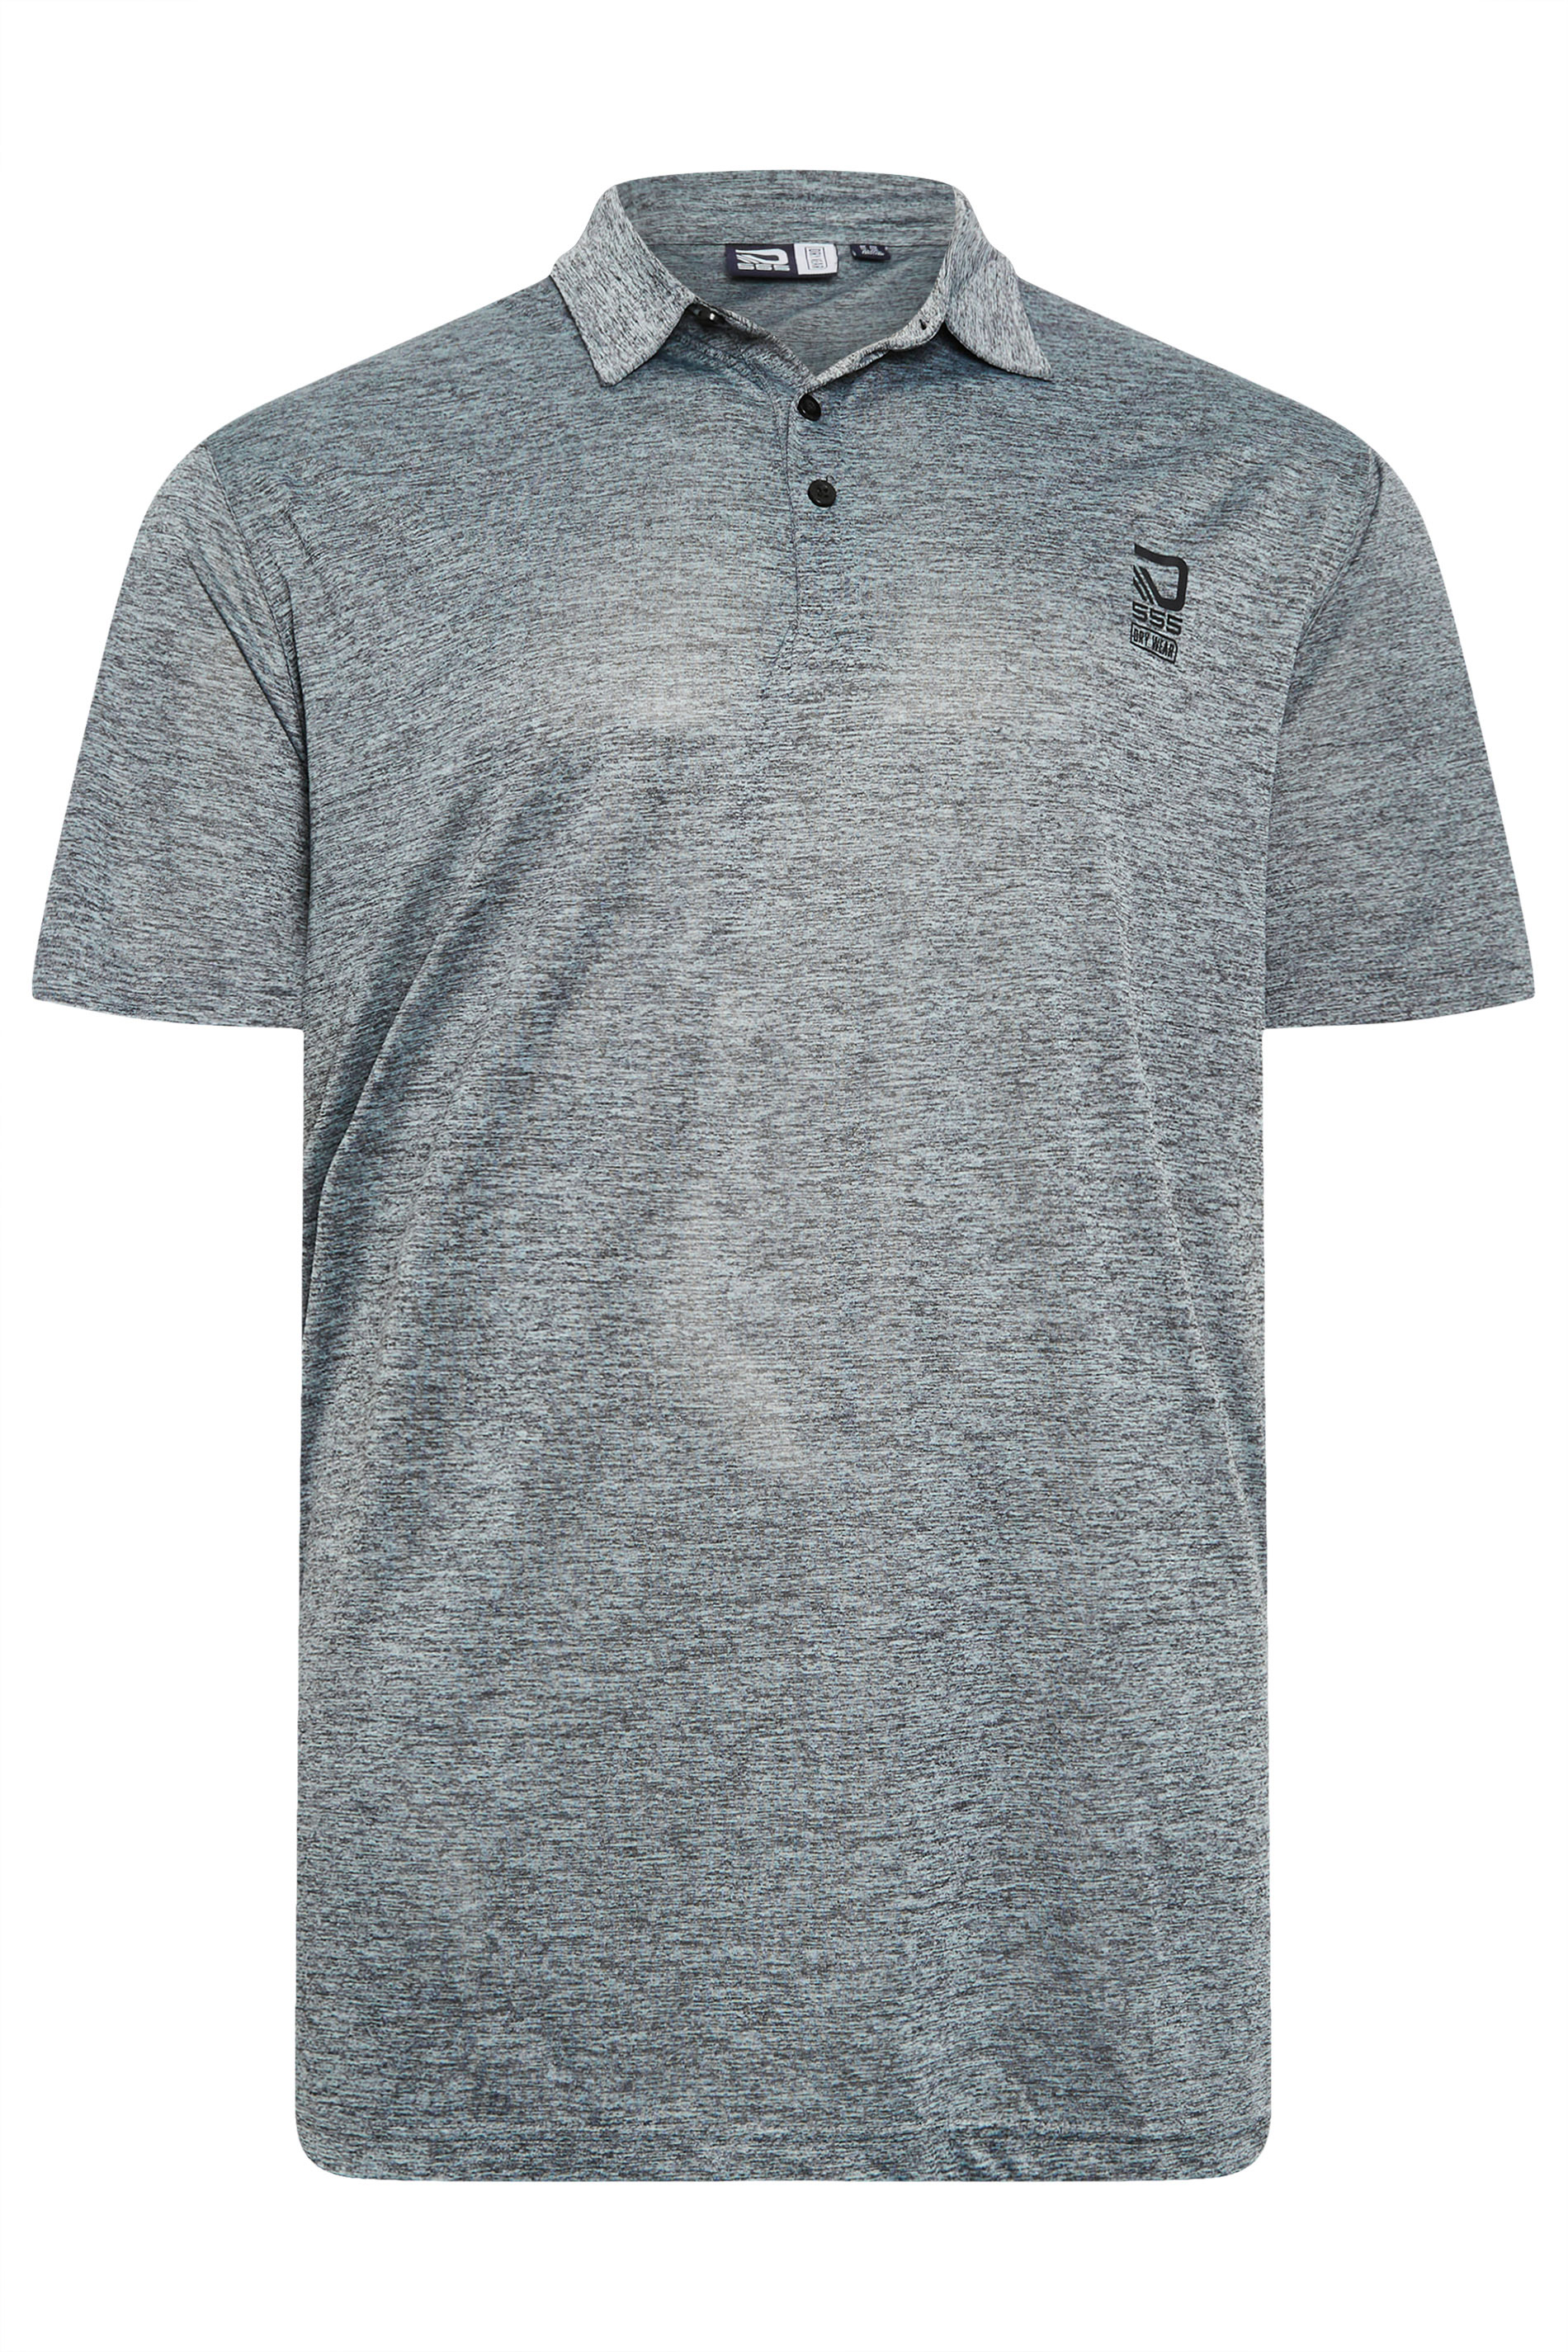 D555 Big & Tall Charcoal Grey Dry Wear Polyester Polo Shirt | BadRhino 1